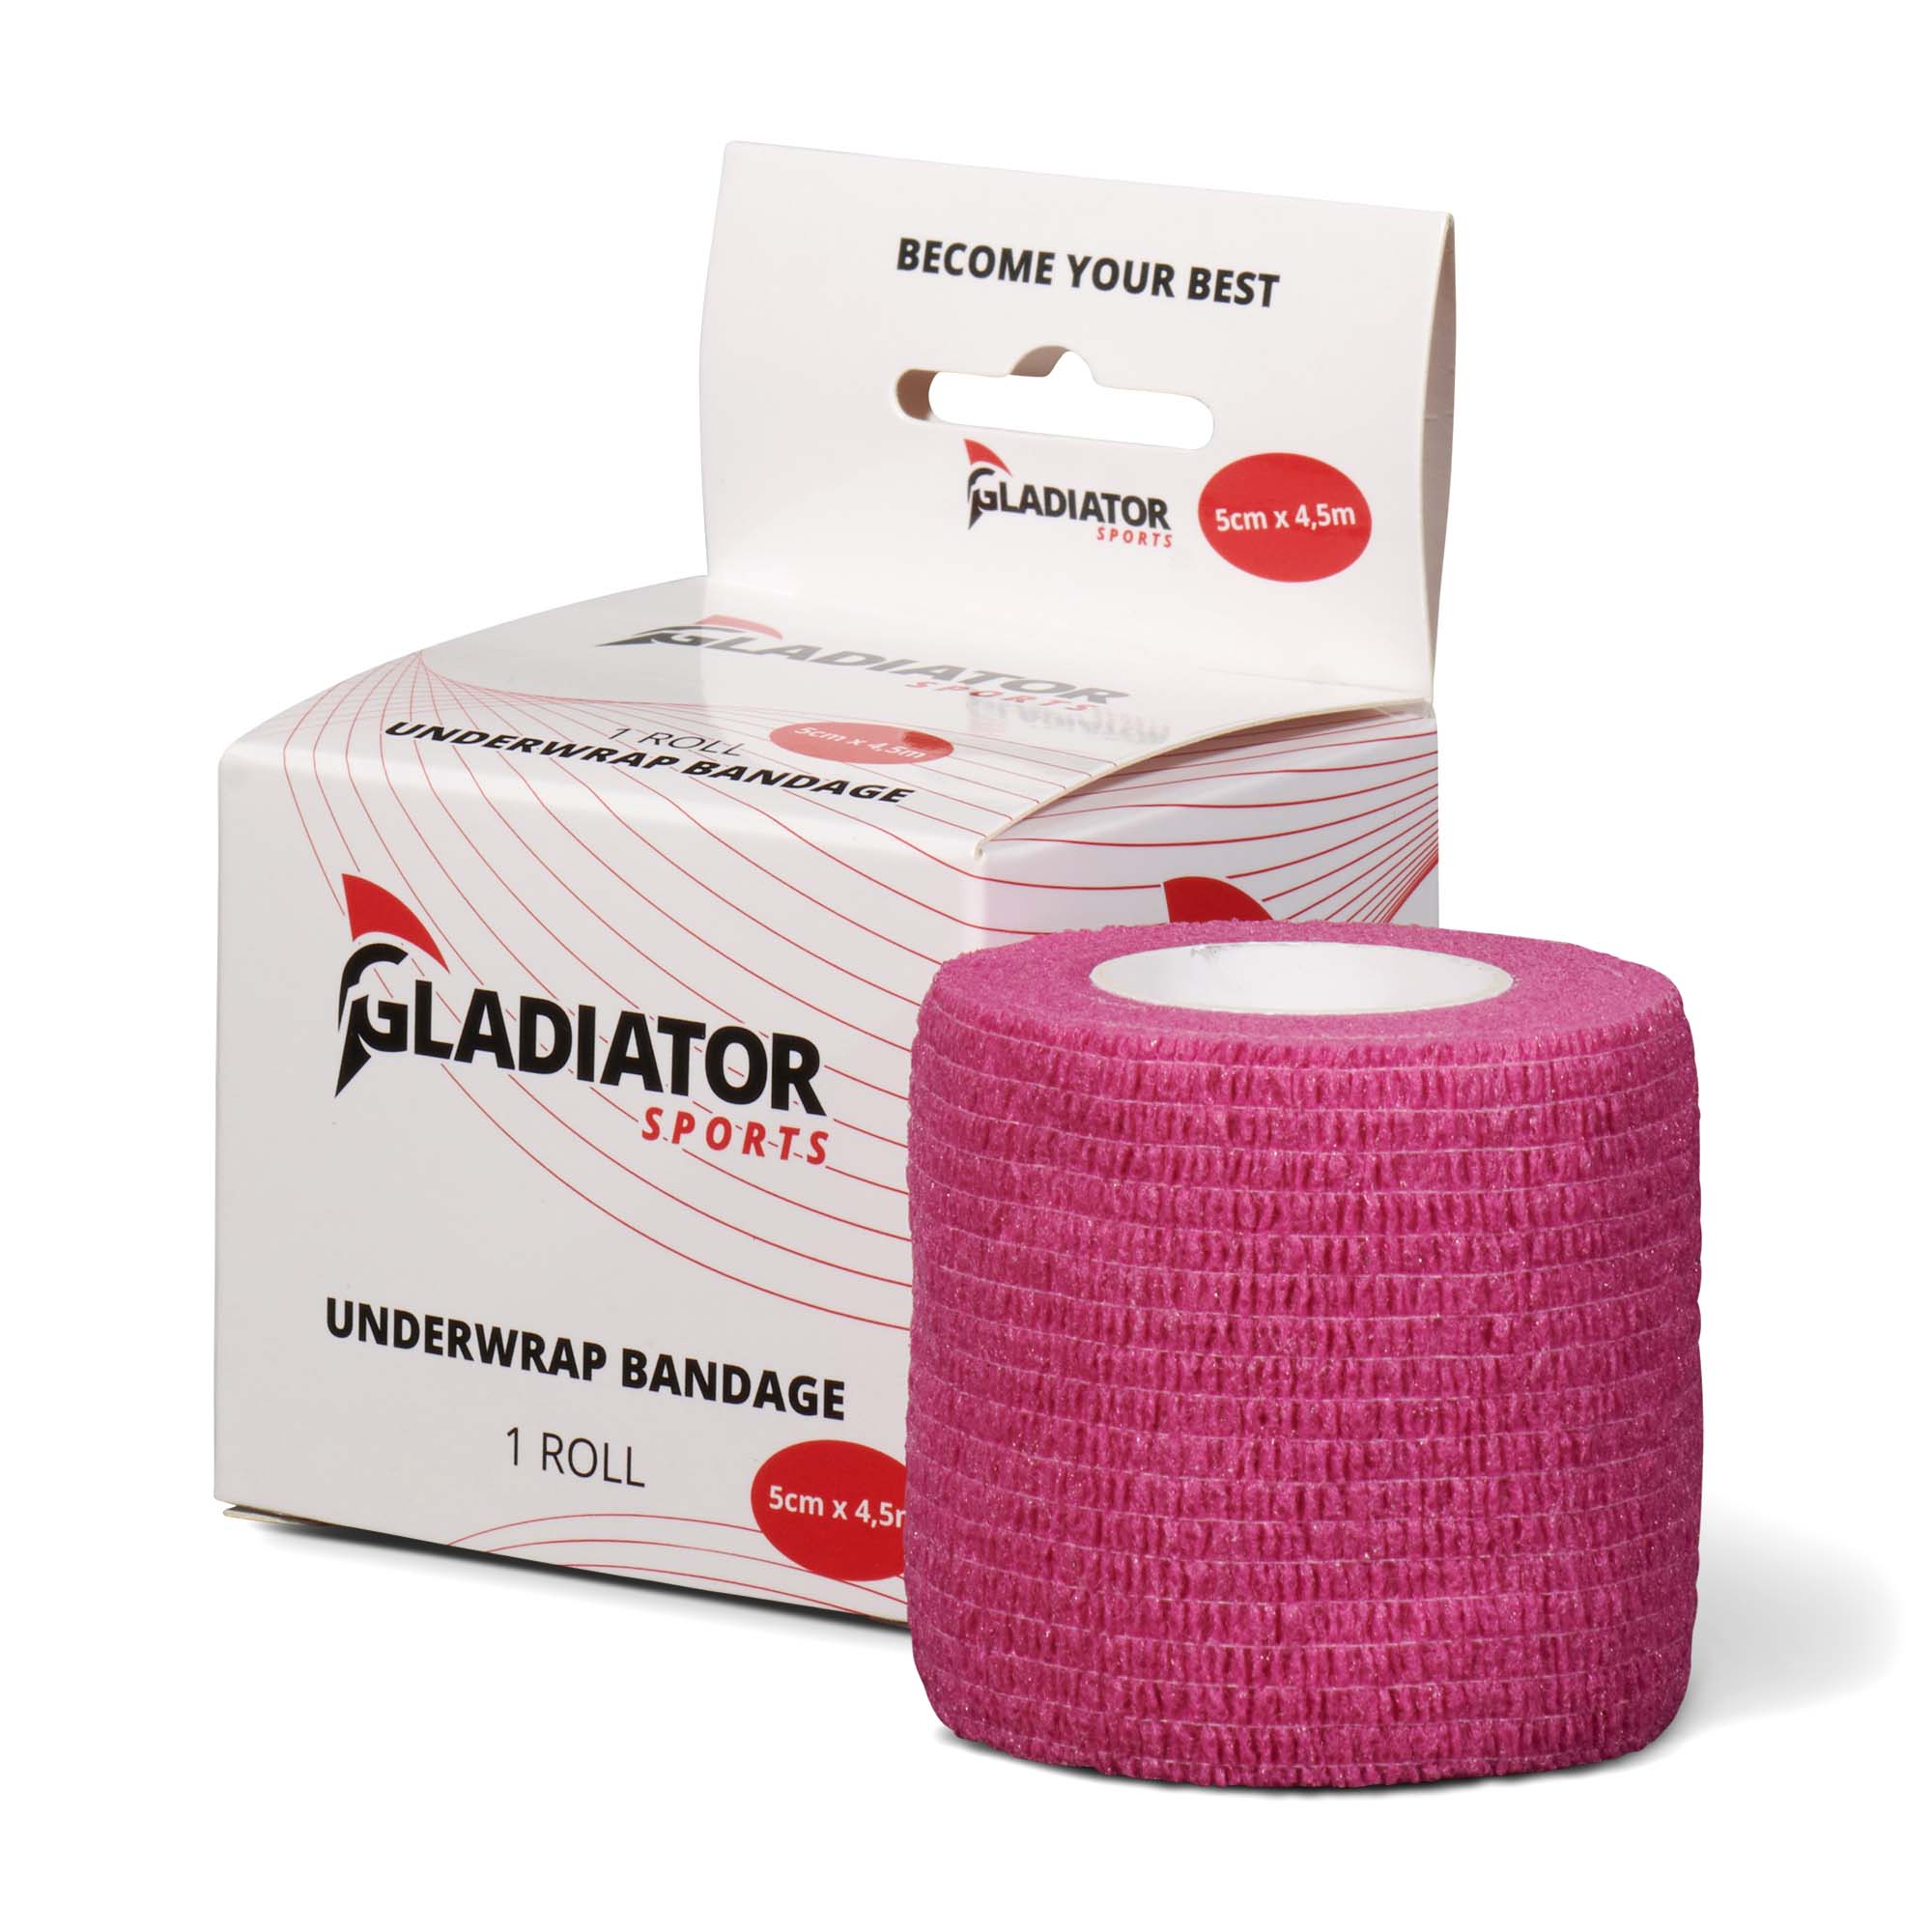 Gladiator Sports underwrap bandage per roll with box pink